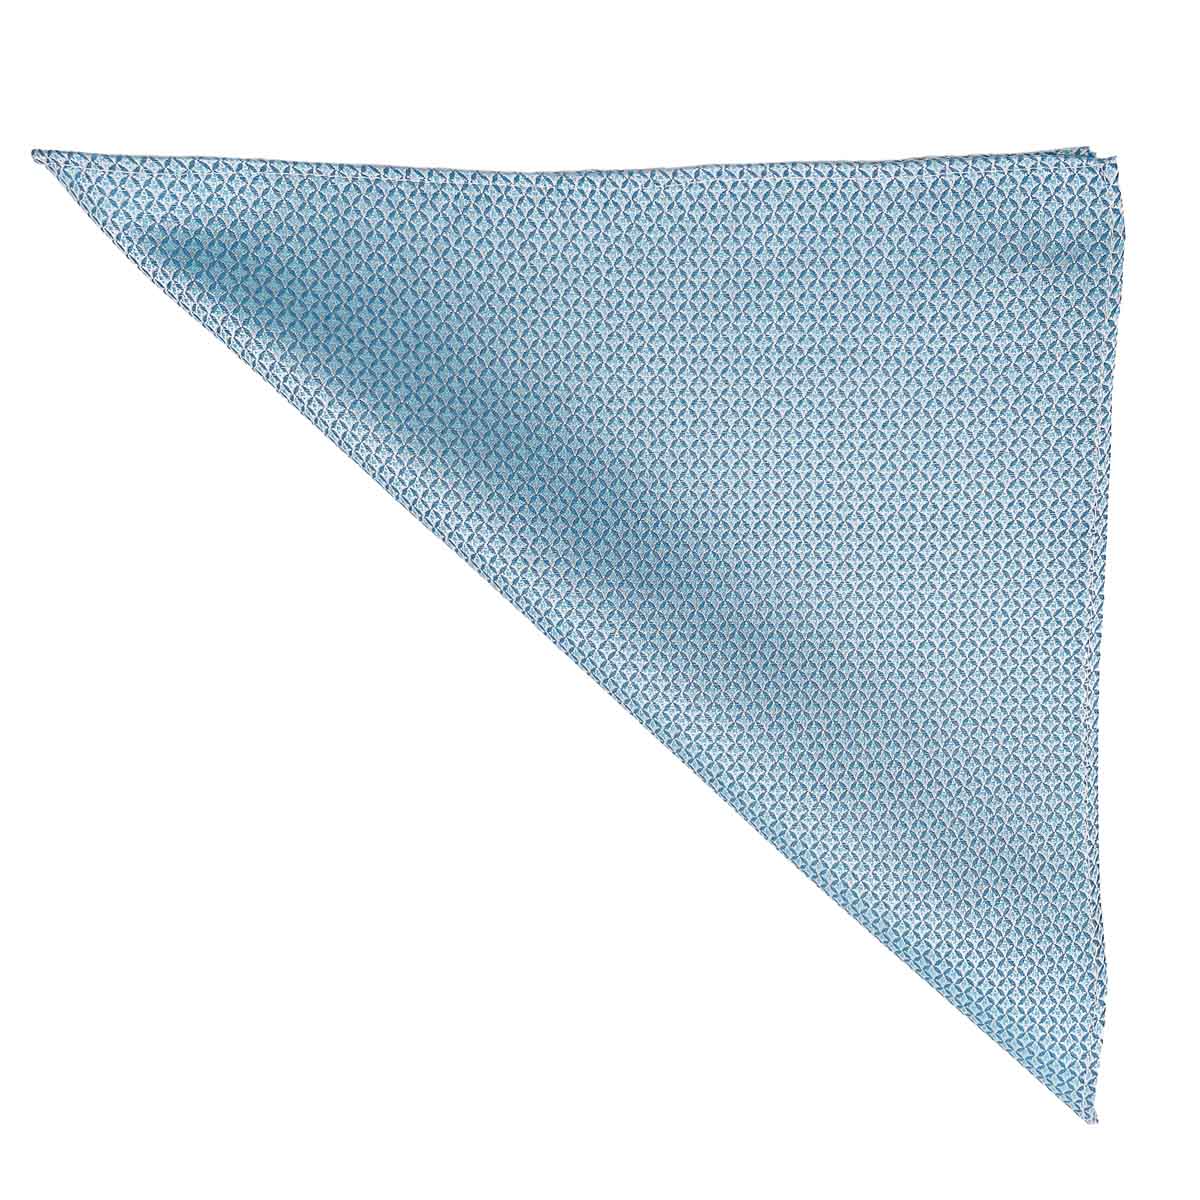 Pocket square in 100% silk - Silk twill - Blue - 26x26 cm - Draeger